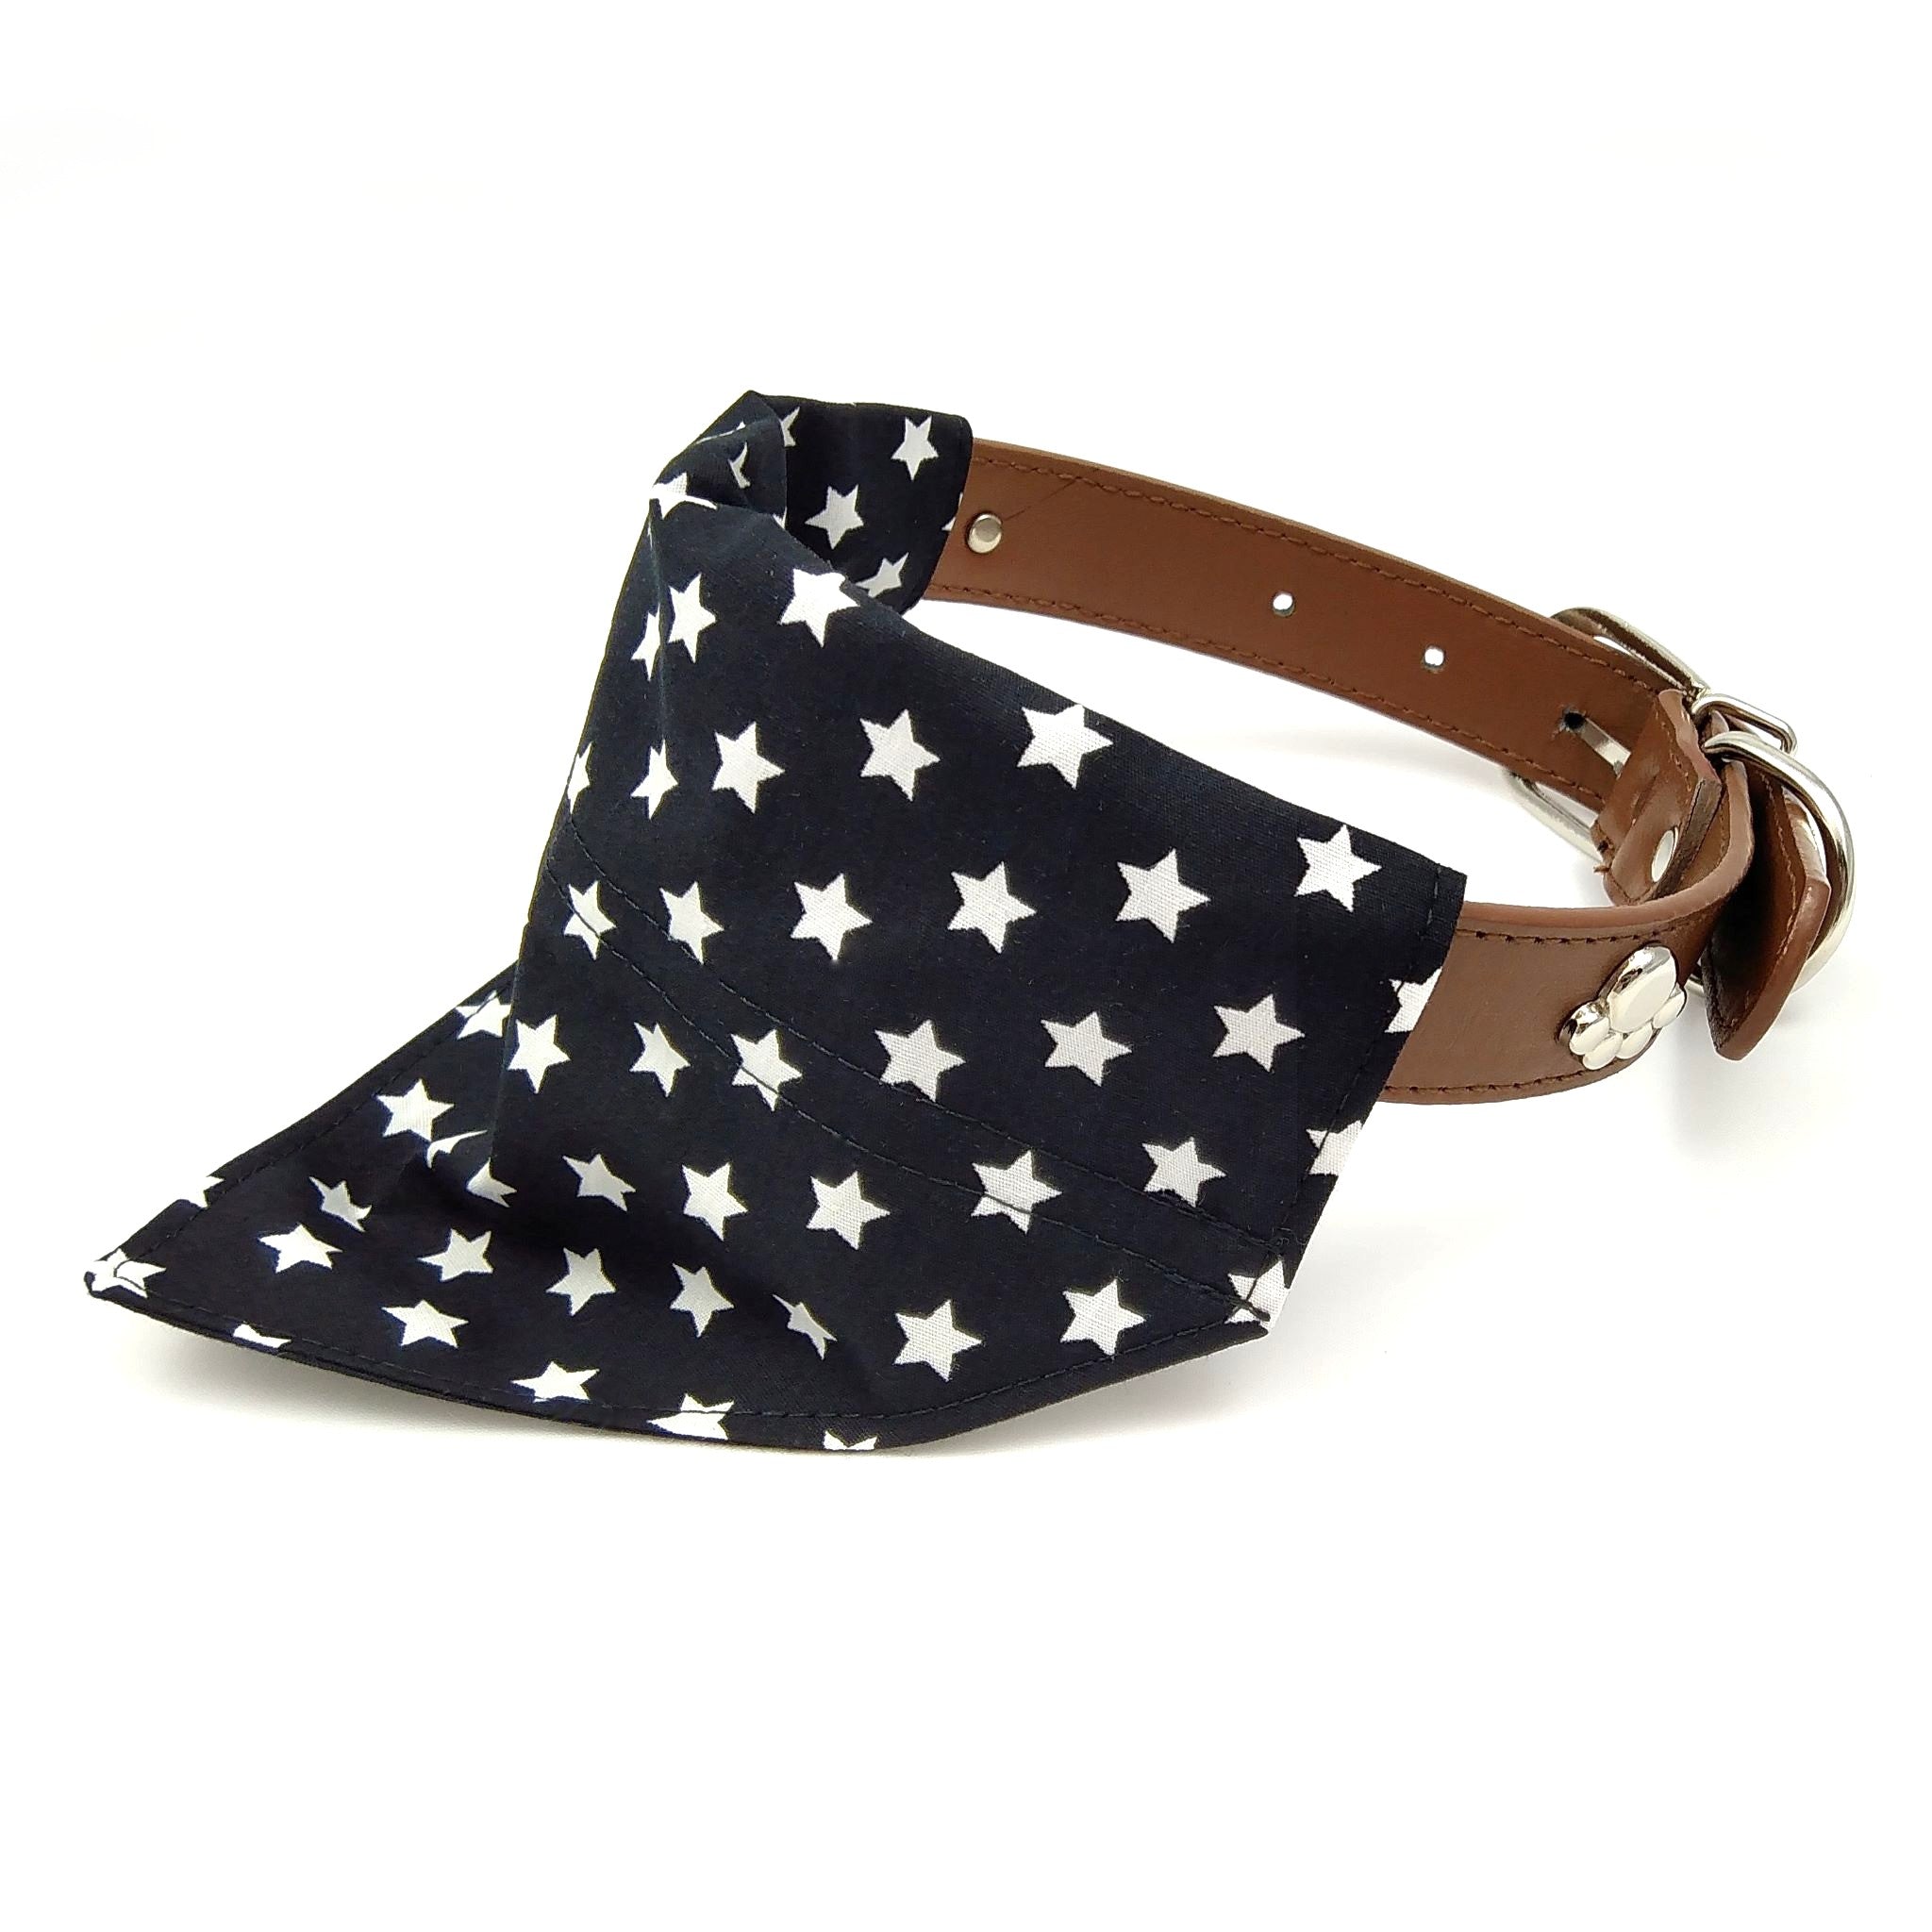 Black dog neckerchief with white stars